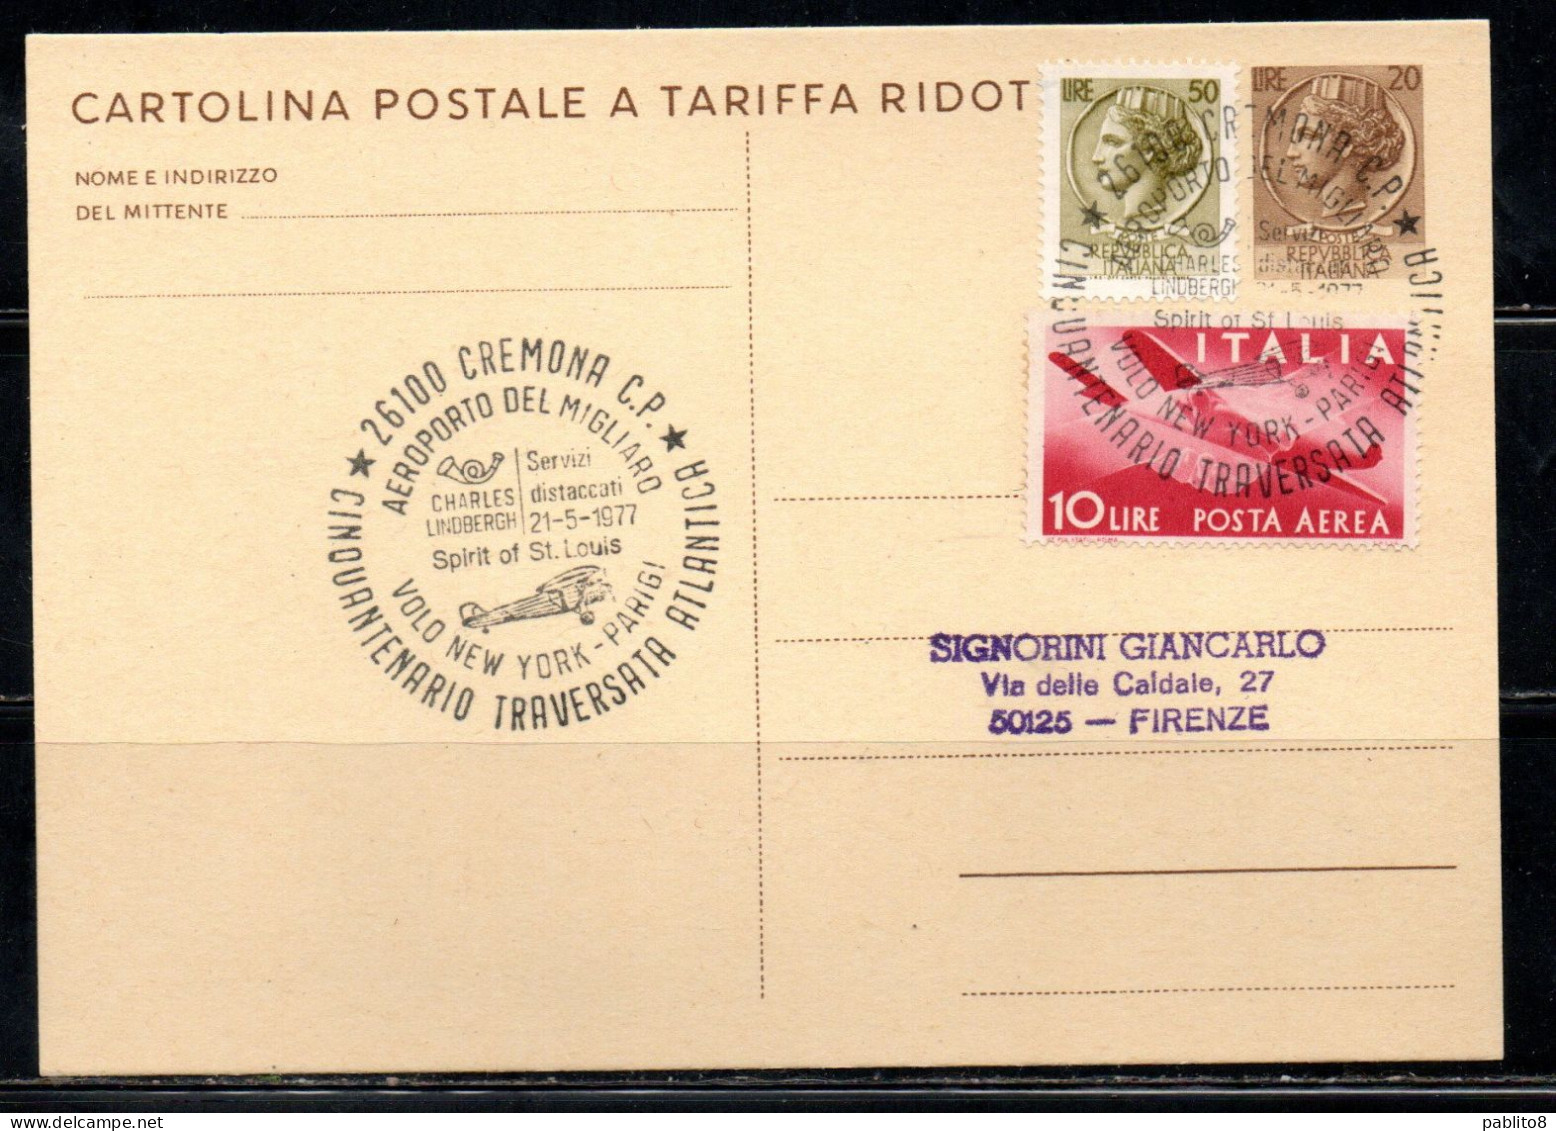 ITALIA REPUBBLICA ITALY REPUBLIC CARTOLINA POSTALE 21-5-1977 CINQUANTENARIO TRAVERSATA ATLANTICA CREMONA VIAGGIATA - Stamped Stationery